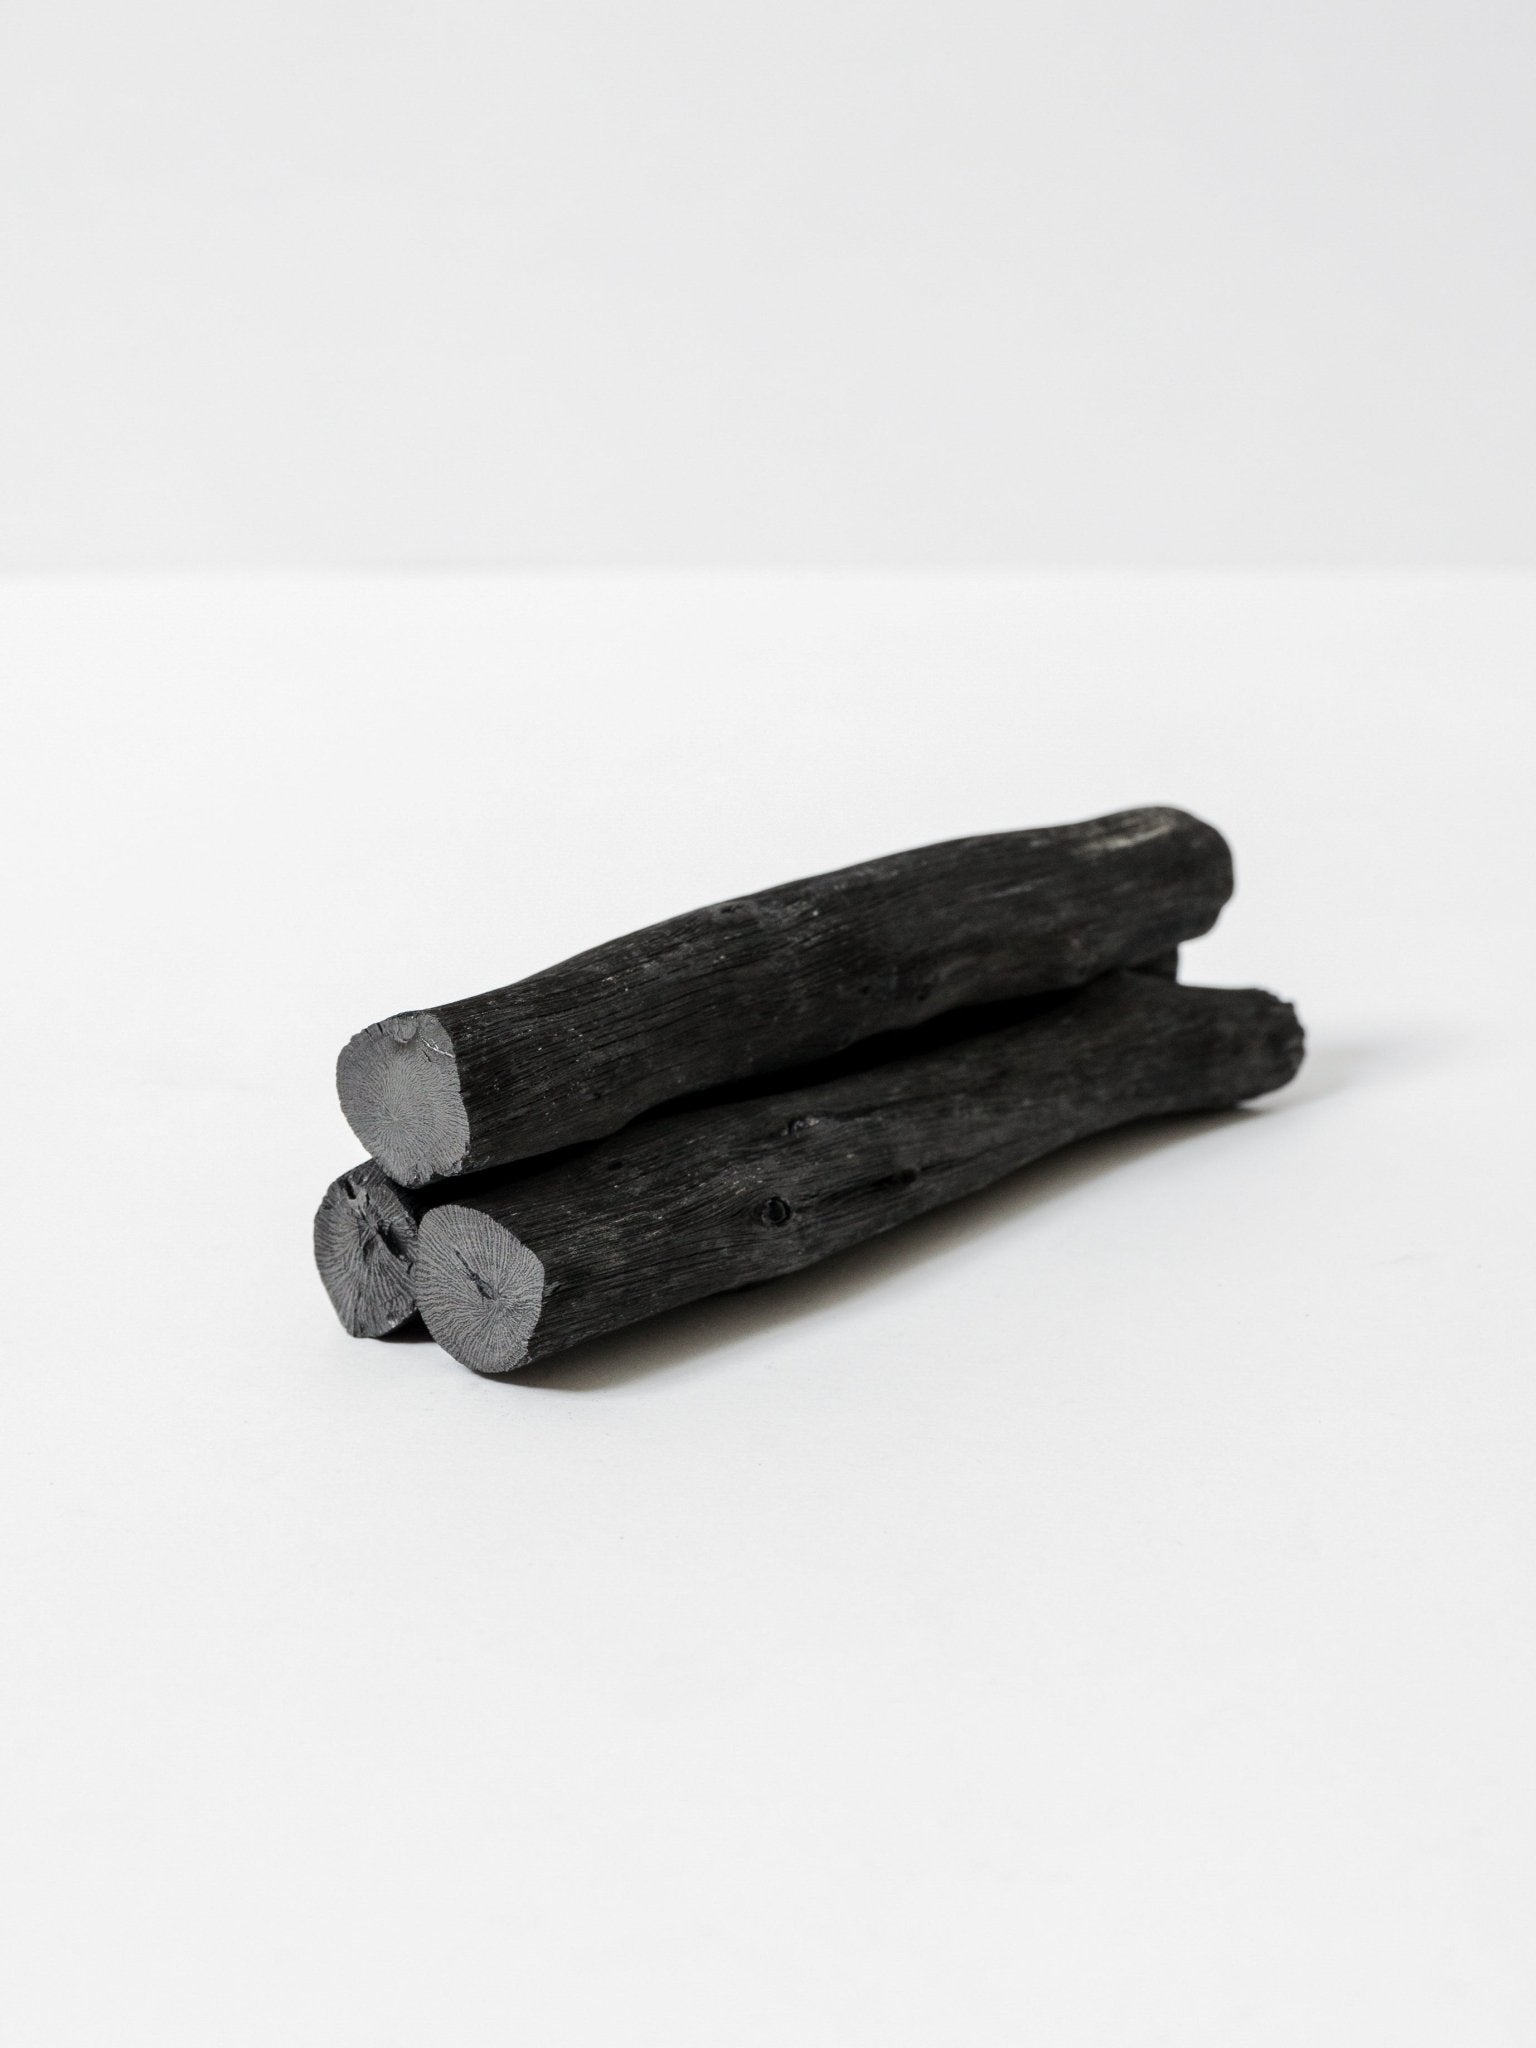 Purifying Binchotan Charcoal Sticks (2 sticks)Kitchen & DiningNagamochi Shop